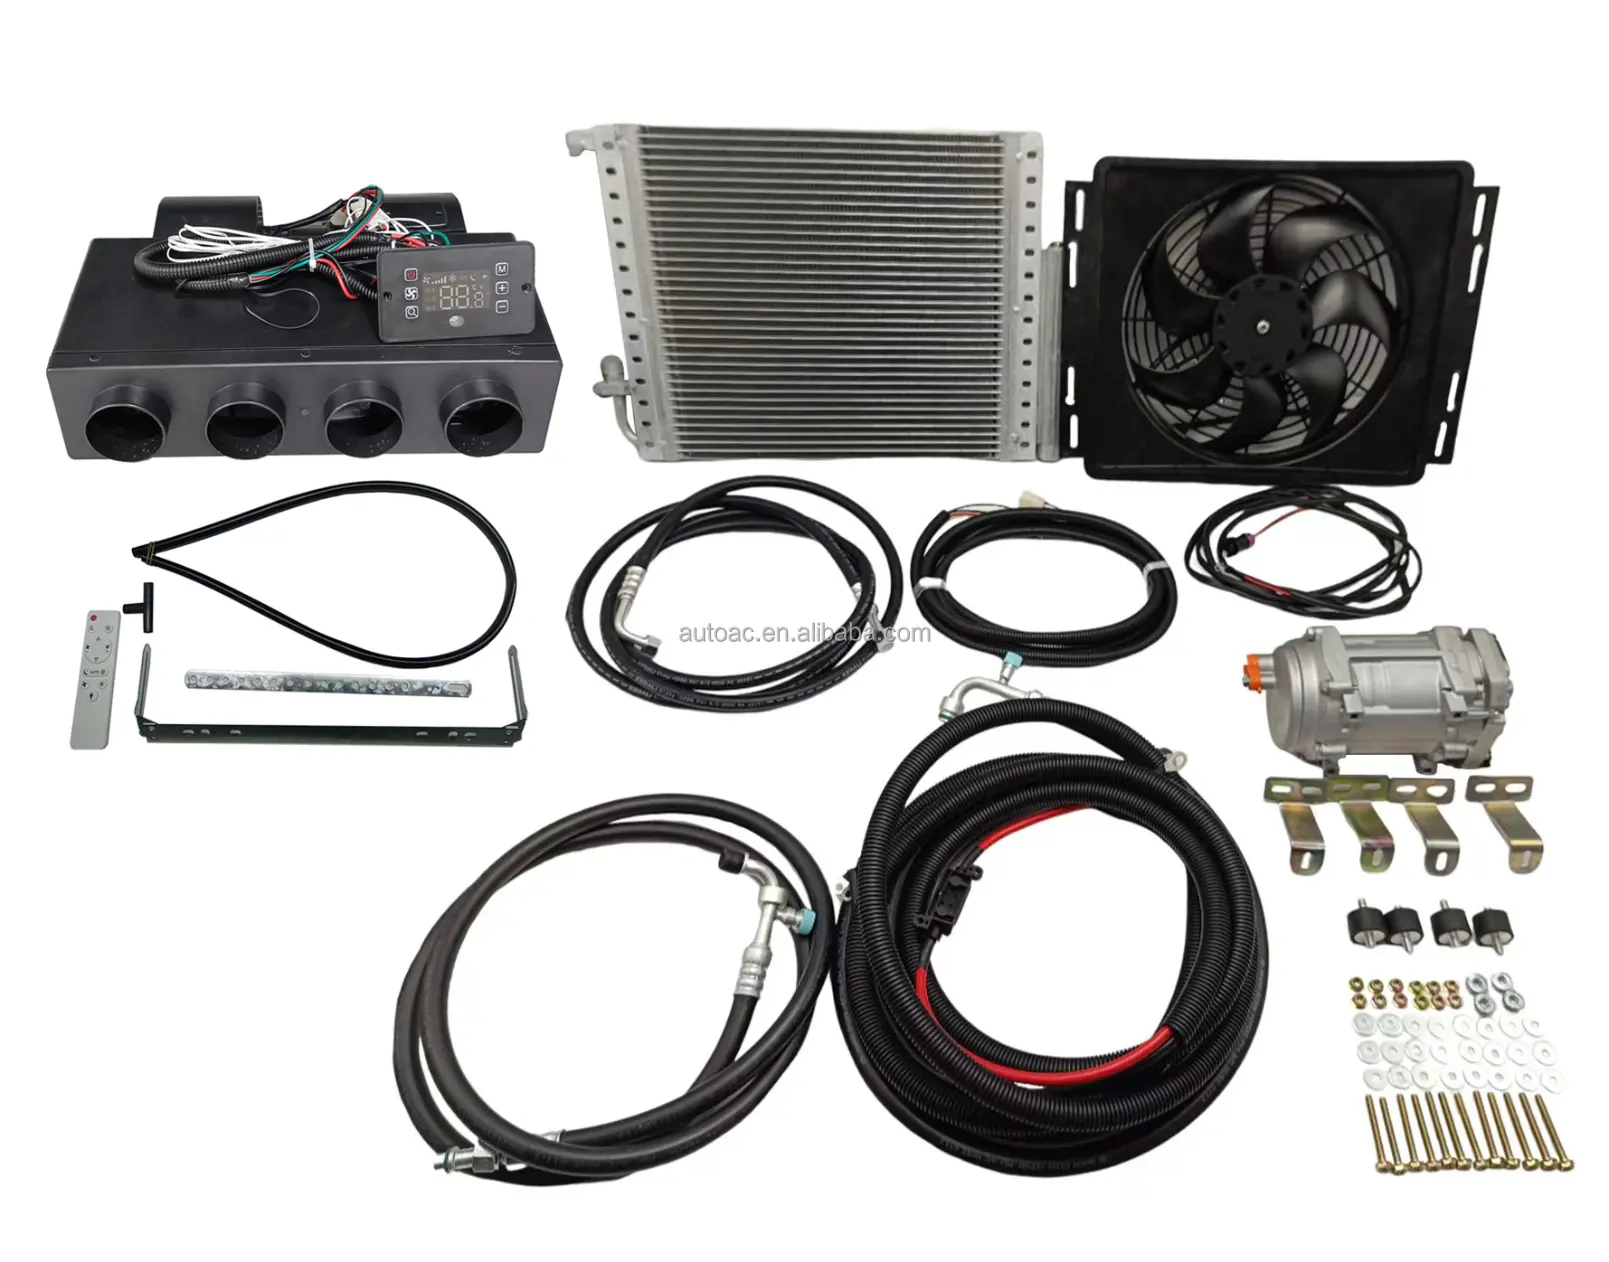 AC mobil Remote control 12v 24v, AC otomotif kelas AC dengan kompresor udara listrik